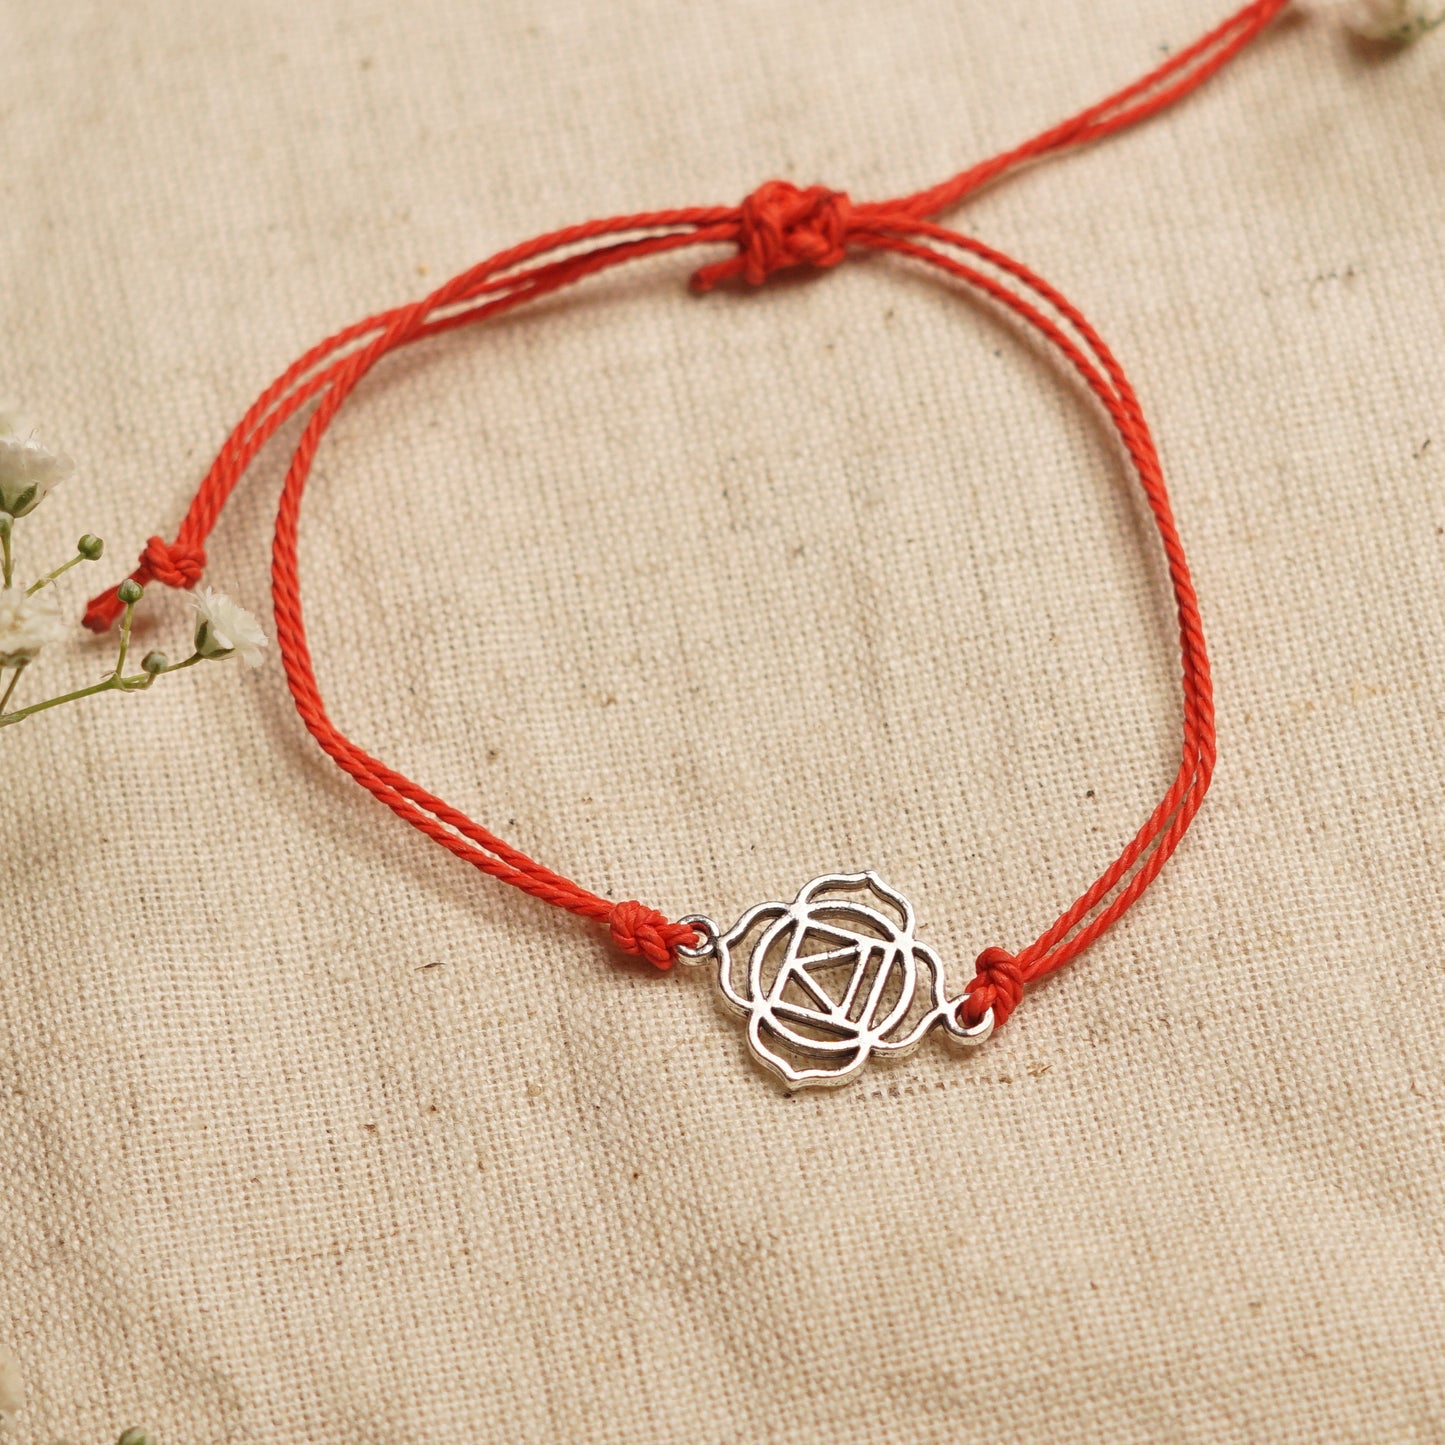 Root Chakra Energy Bracelet with size adjustable sliding knot